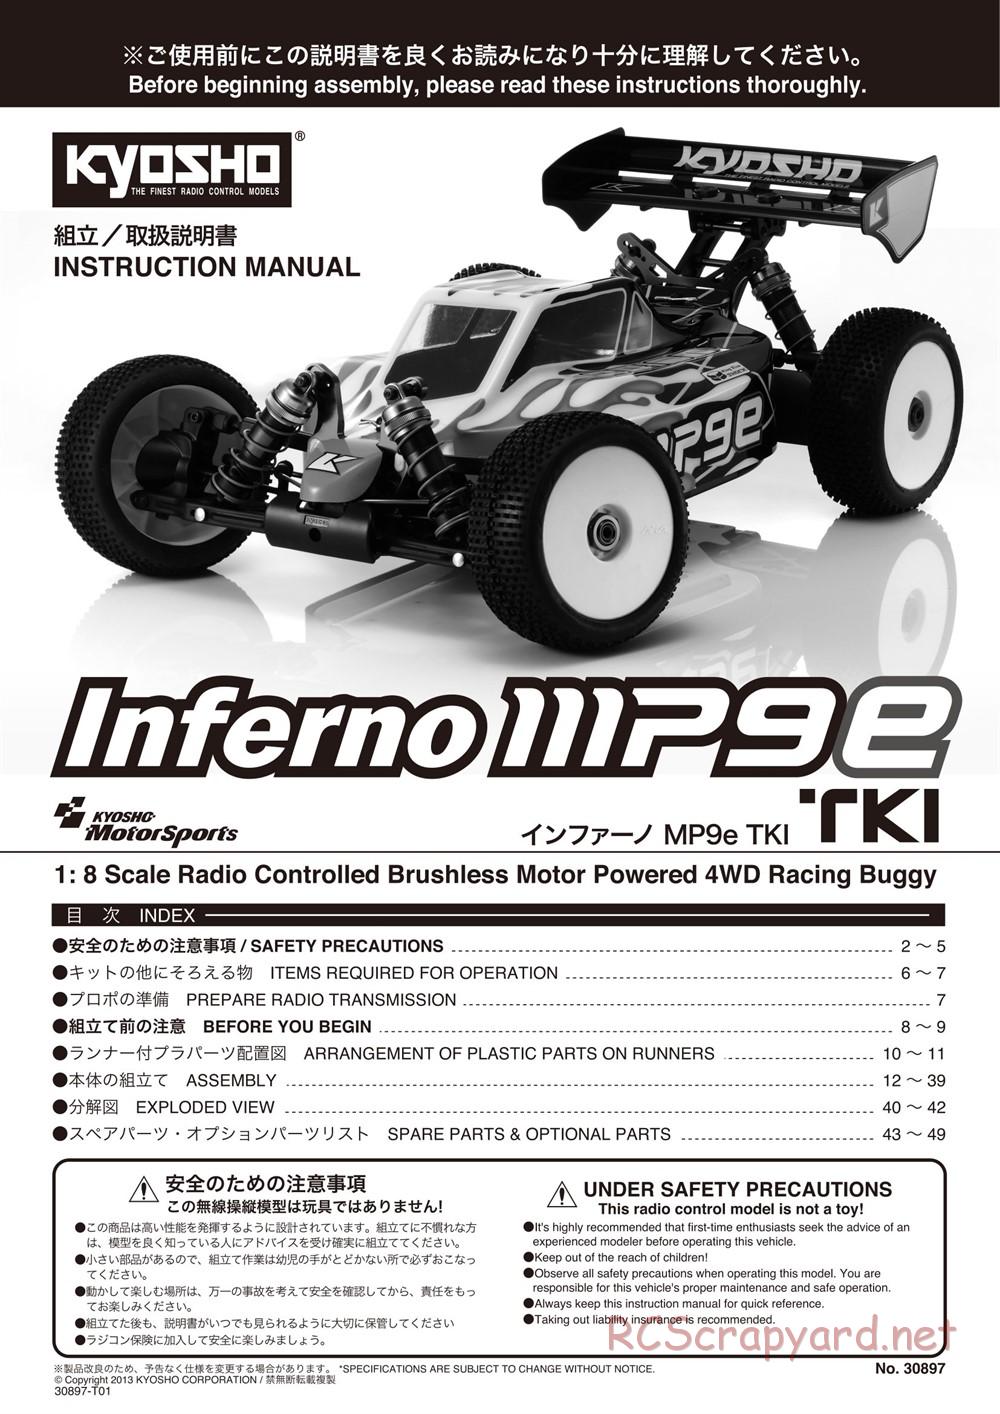 Kyosho - Inferno MP9e TKI - Manual - Page 1